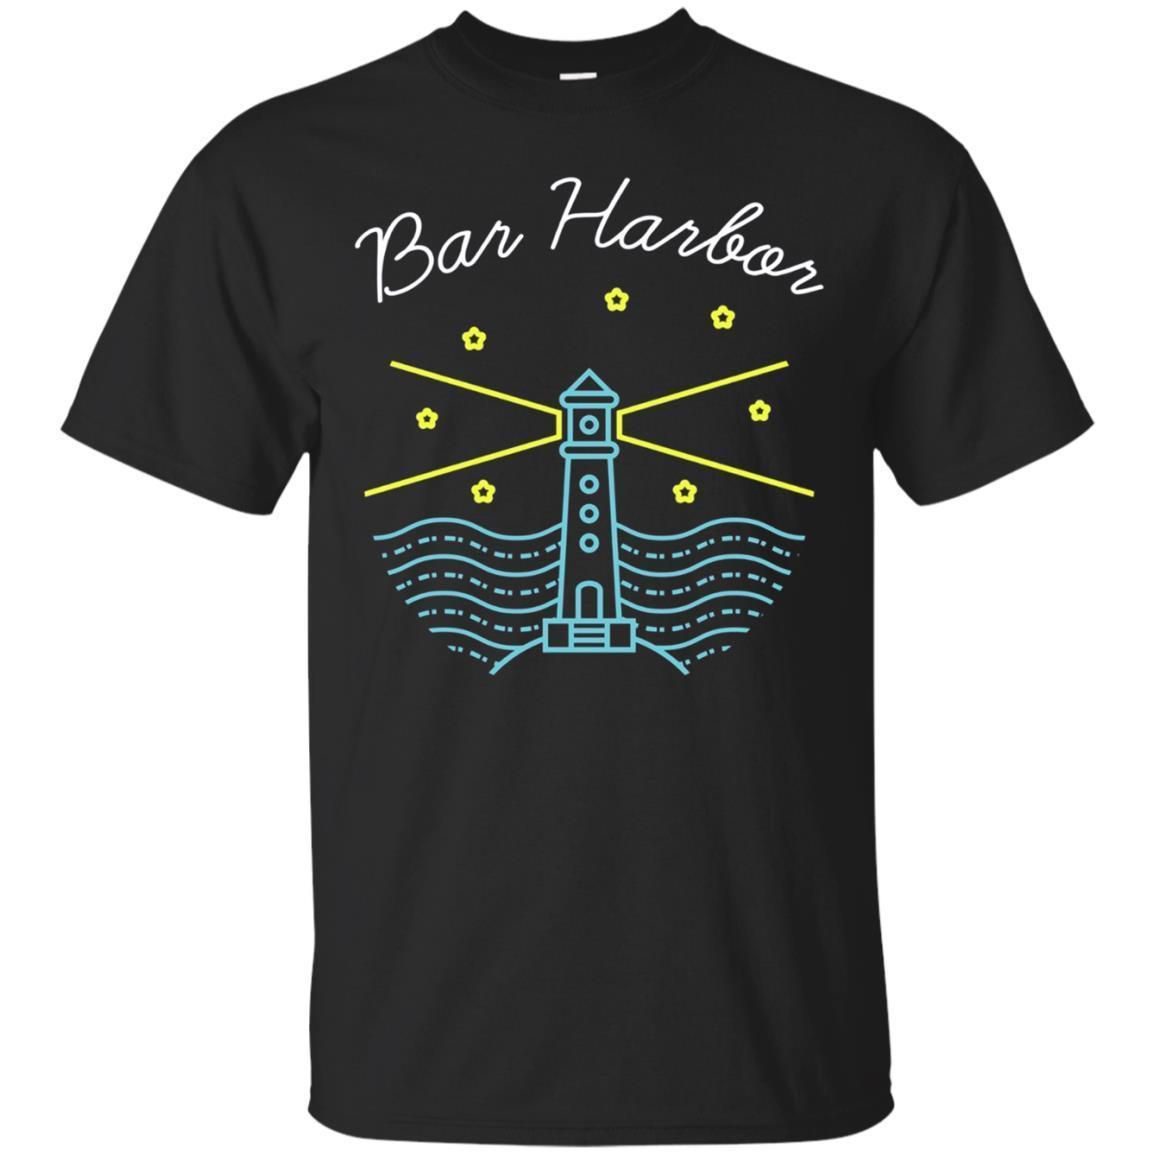 Modern Bar Harbor T-shirt - Unique Bar Harbor Maine Gift